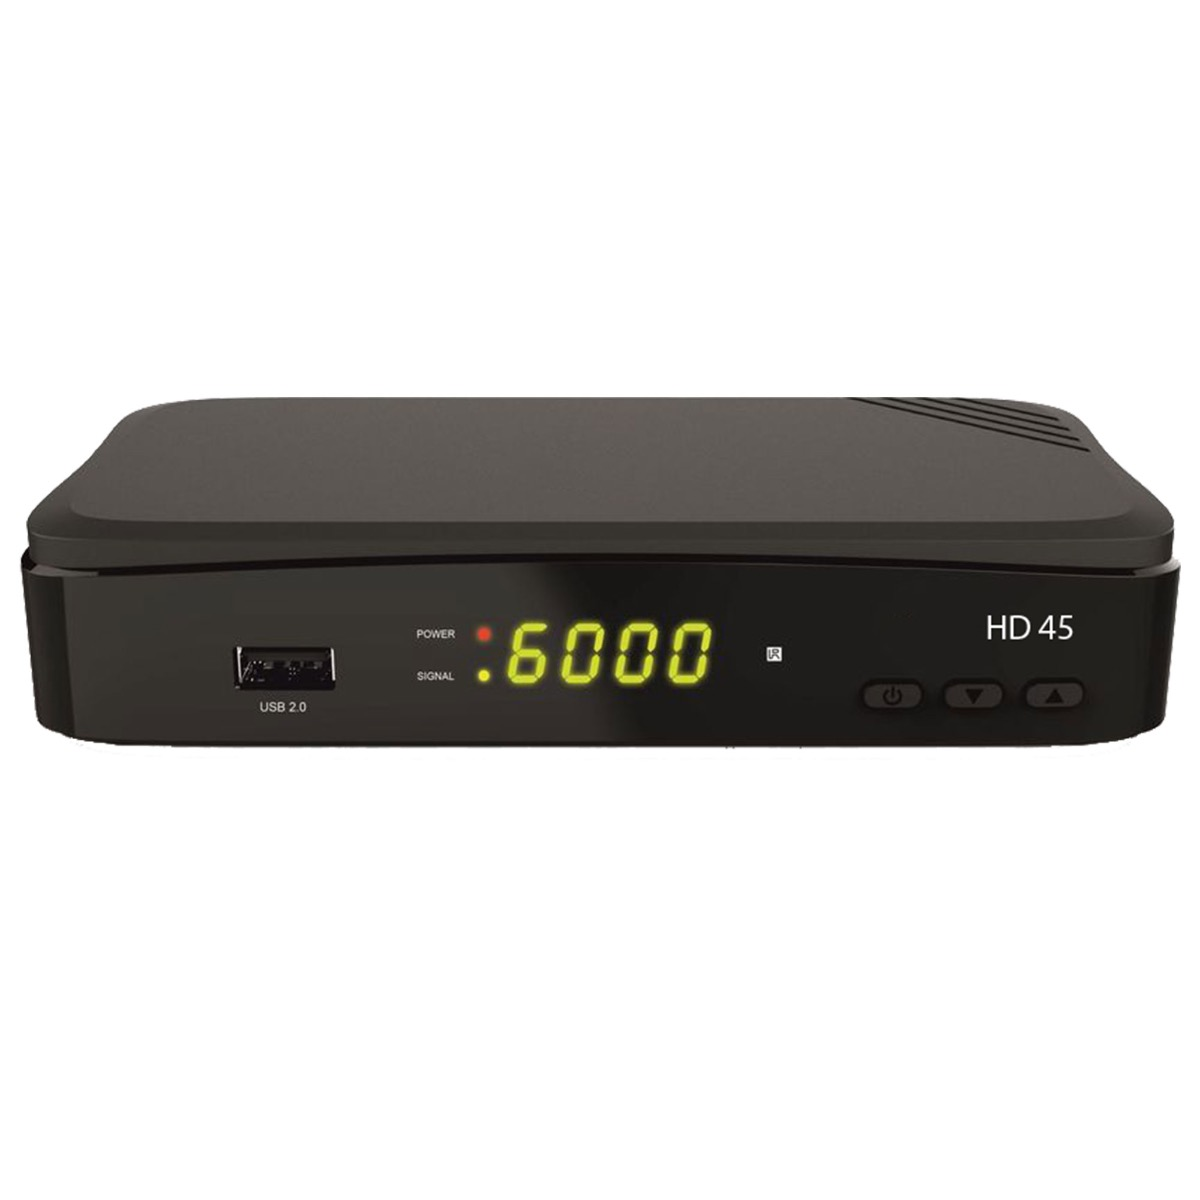 COMAG HD45 DVB-S, DVB-S2, (HDTV, Satellitenreceiver schwarz)